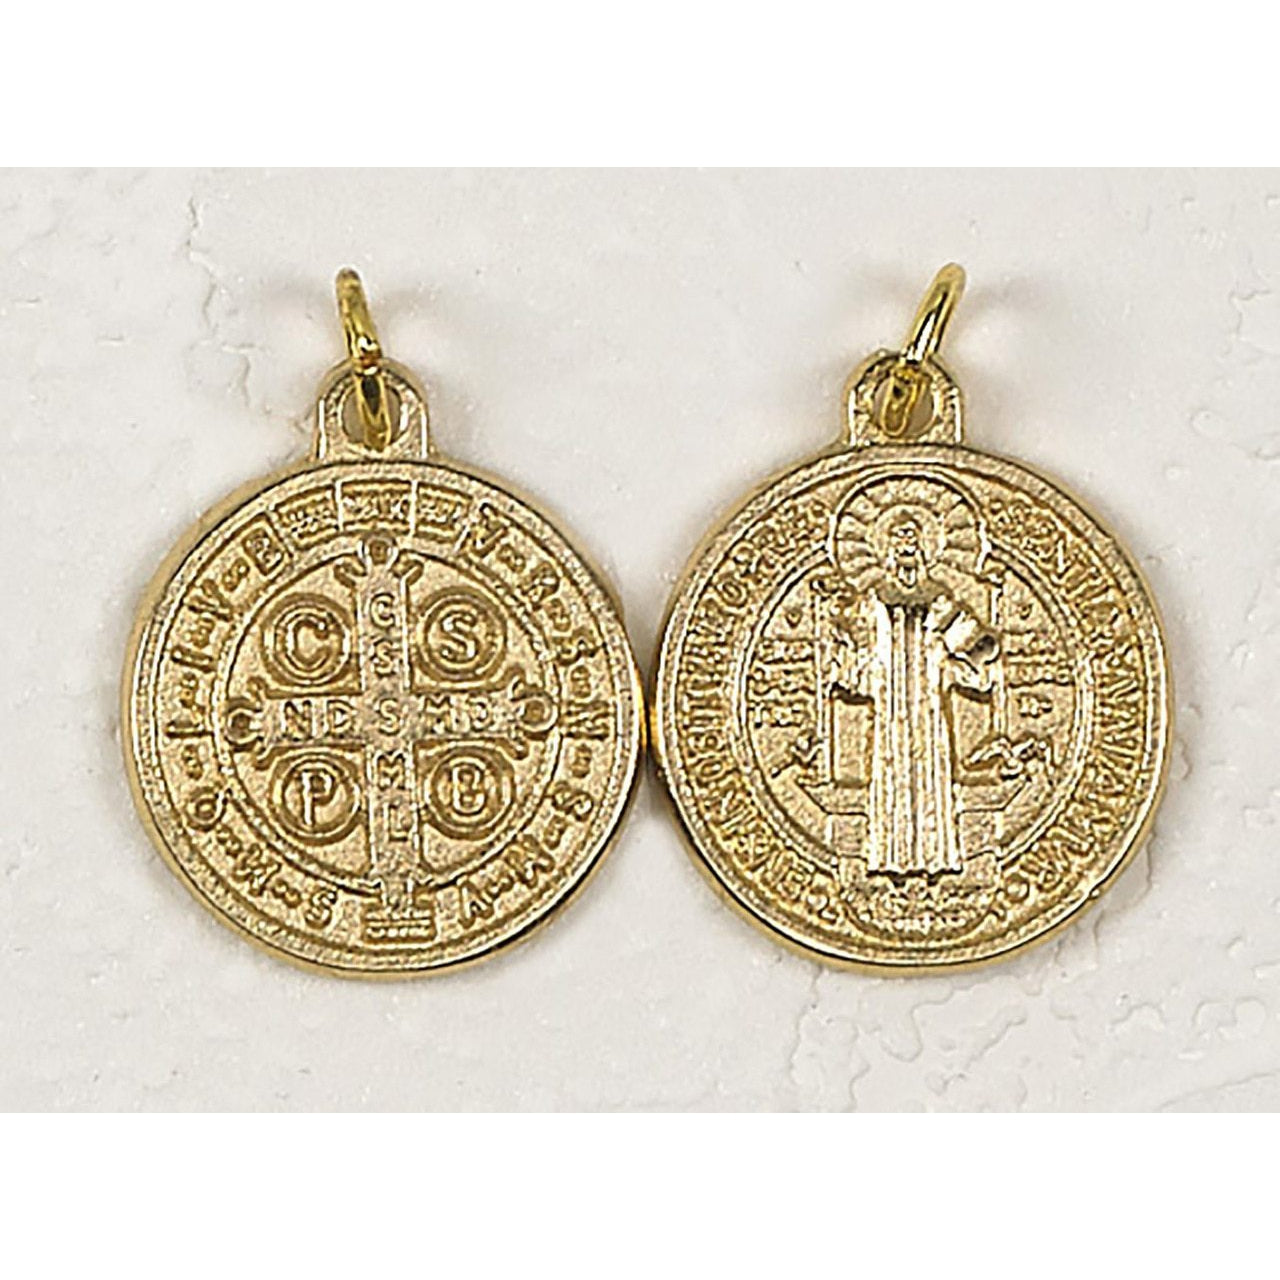 Vatican Imports Large Saint Benedict Medal - 2 Diameter (Gold-Tone)